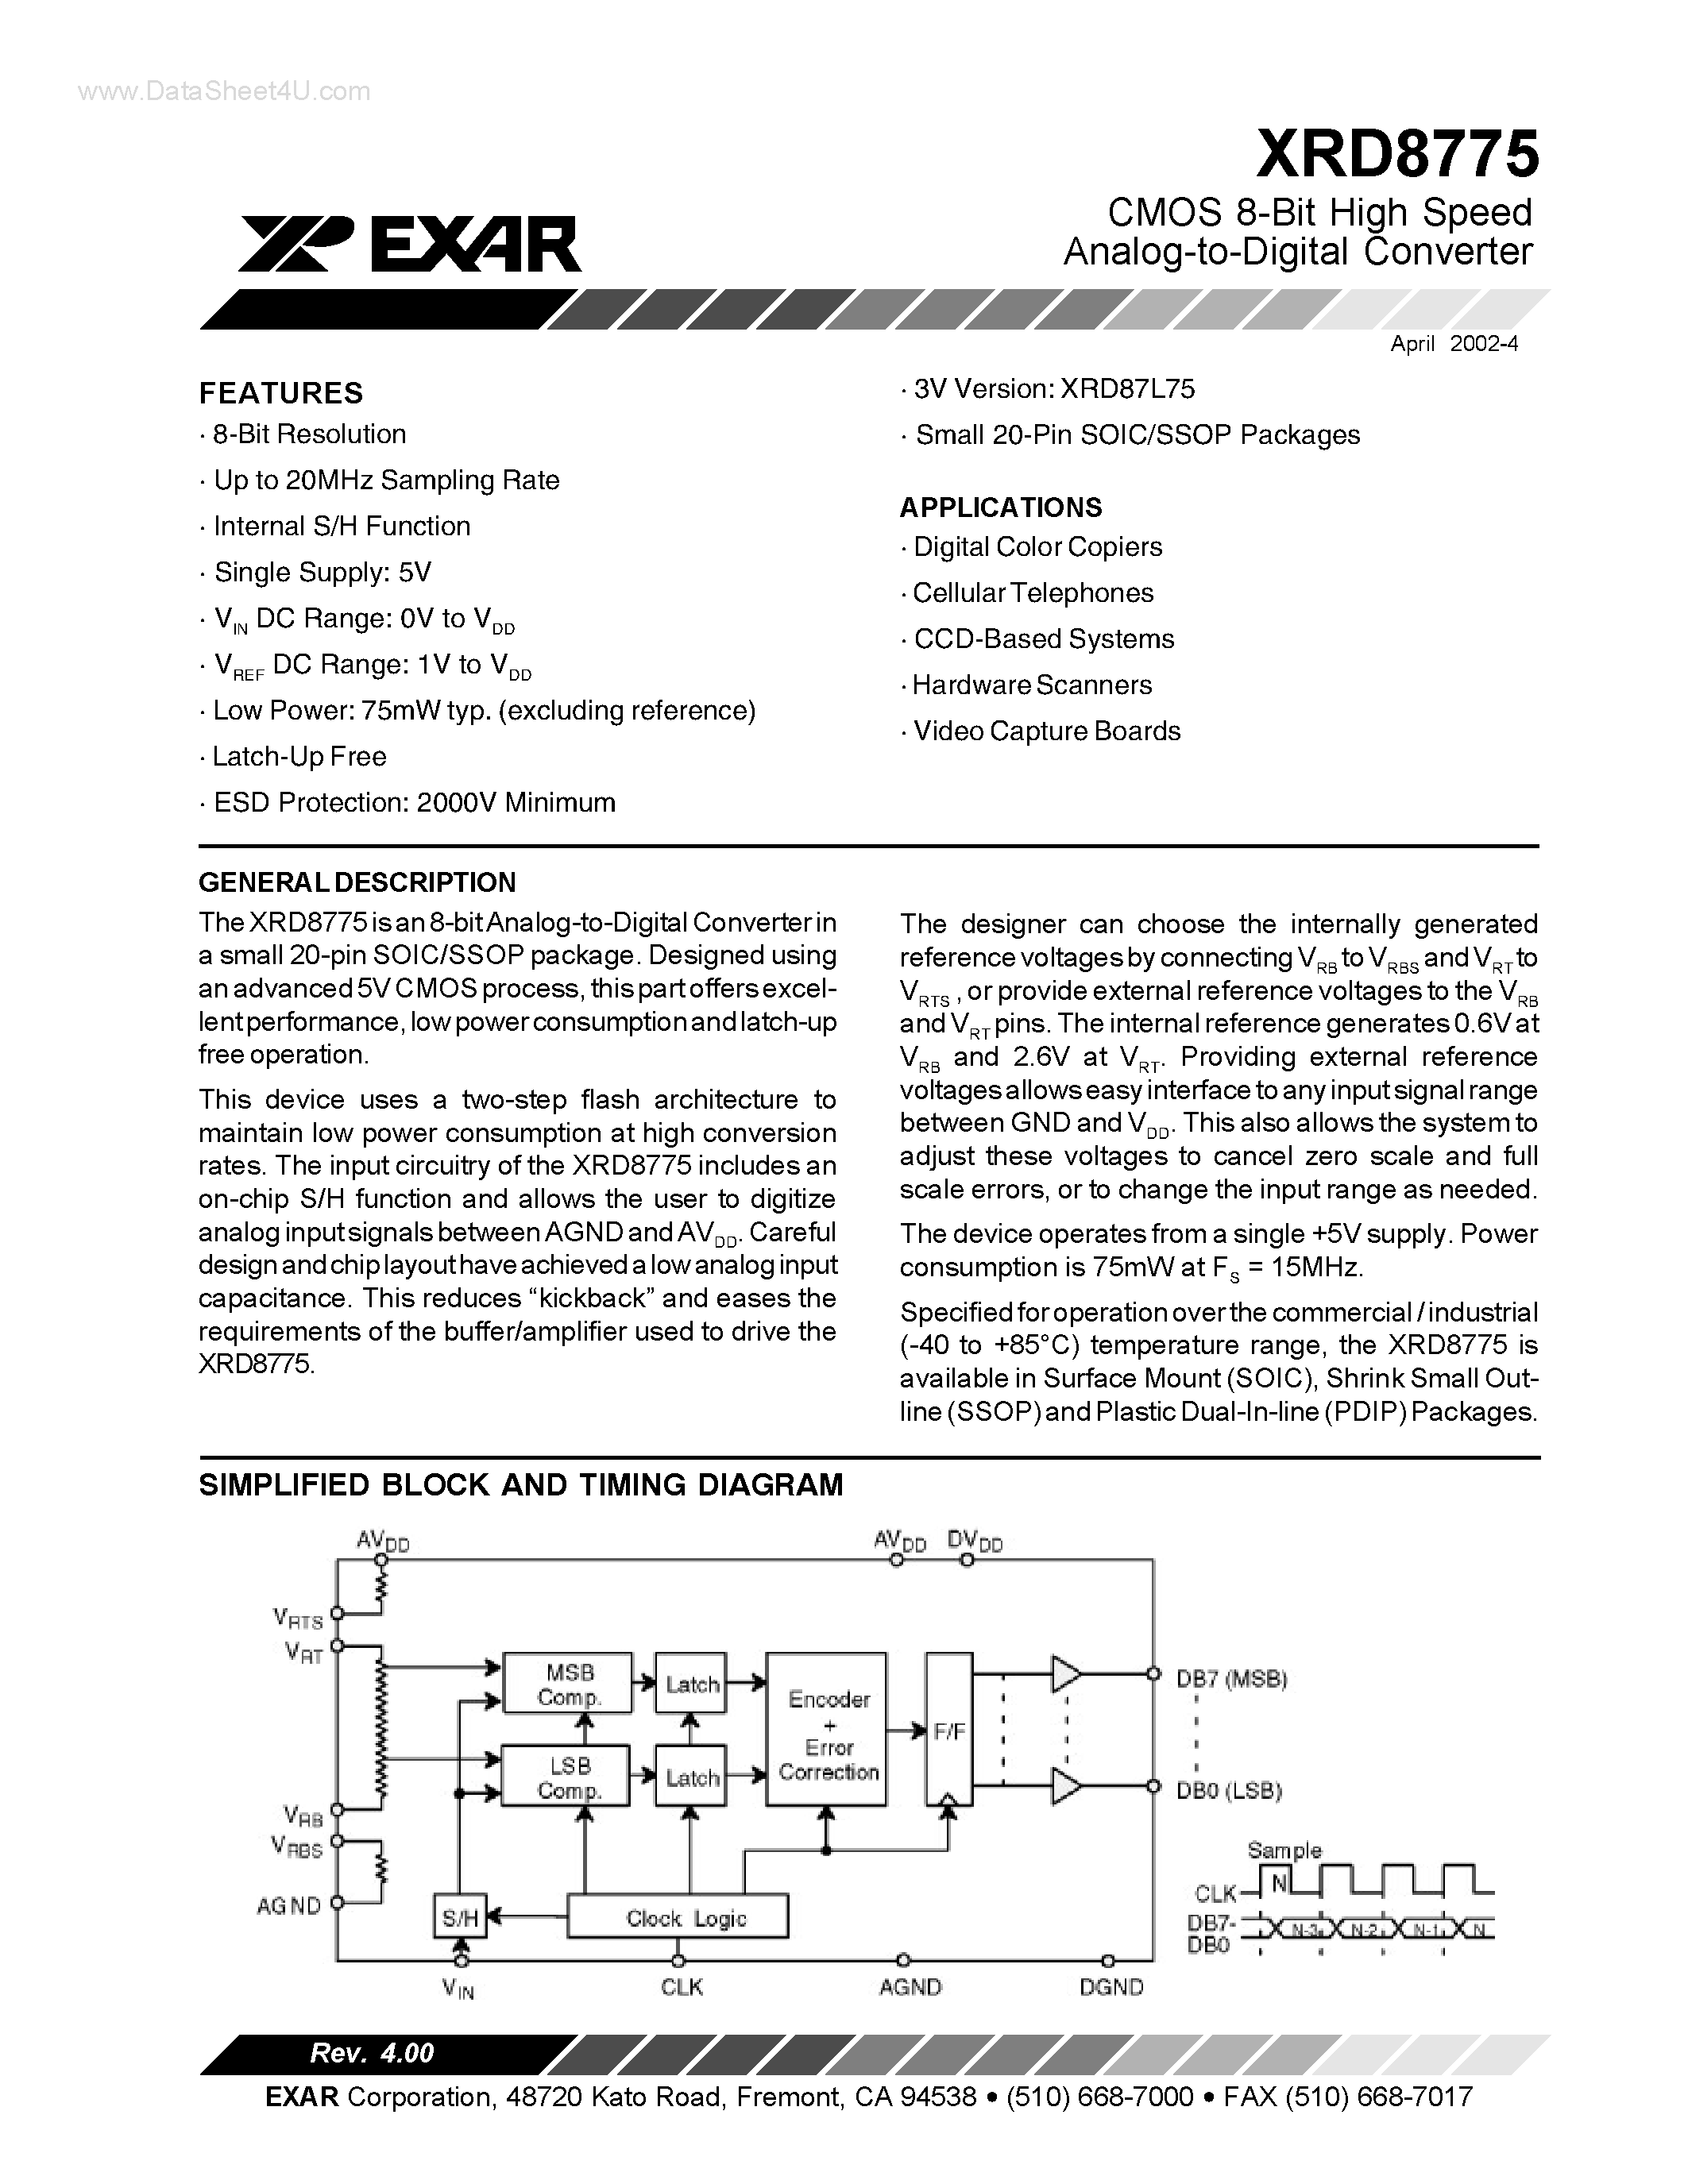 Даташит XRD8775 - CMOS 8-Bit High Speed Analog-to-Digital Converter страница 1